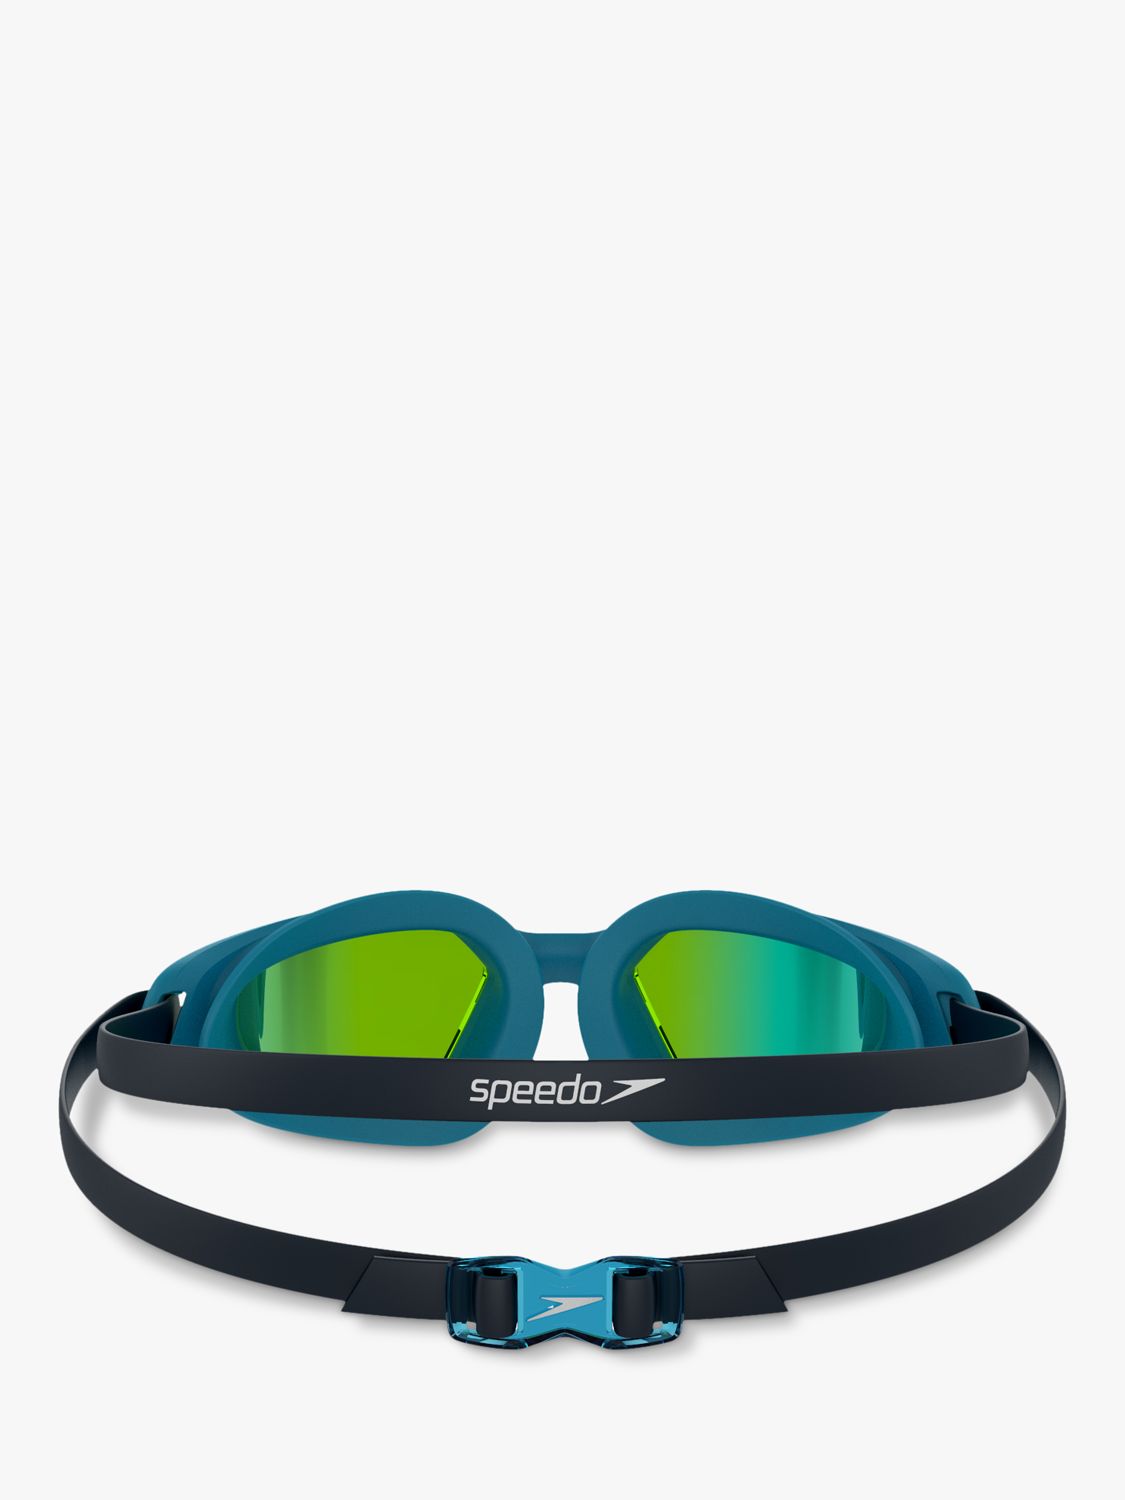 Buy Speedo Children's Hydropulse Mirror Swimming Goggles, Turquoise Online at johnlewis.com